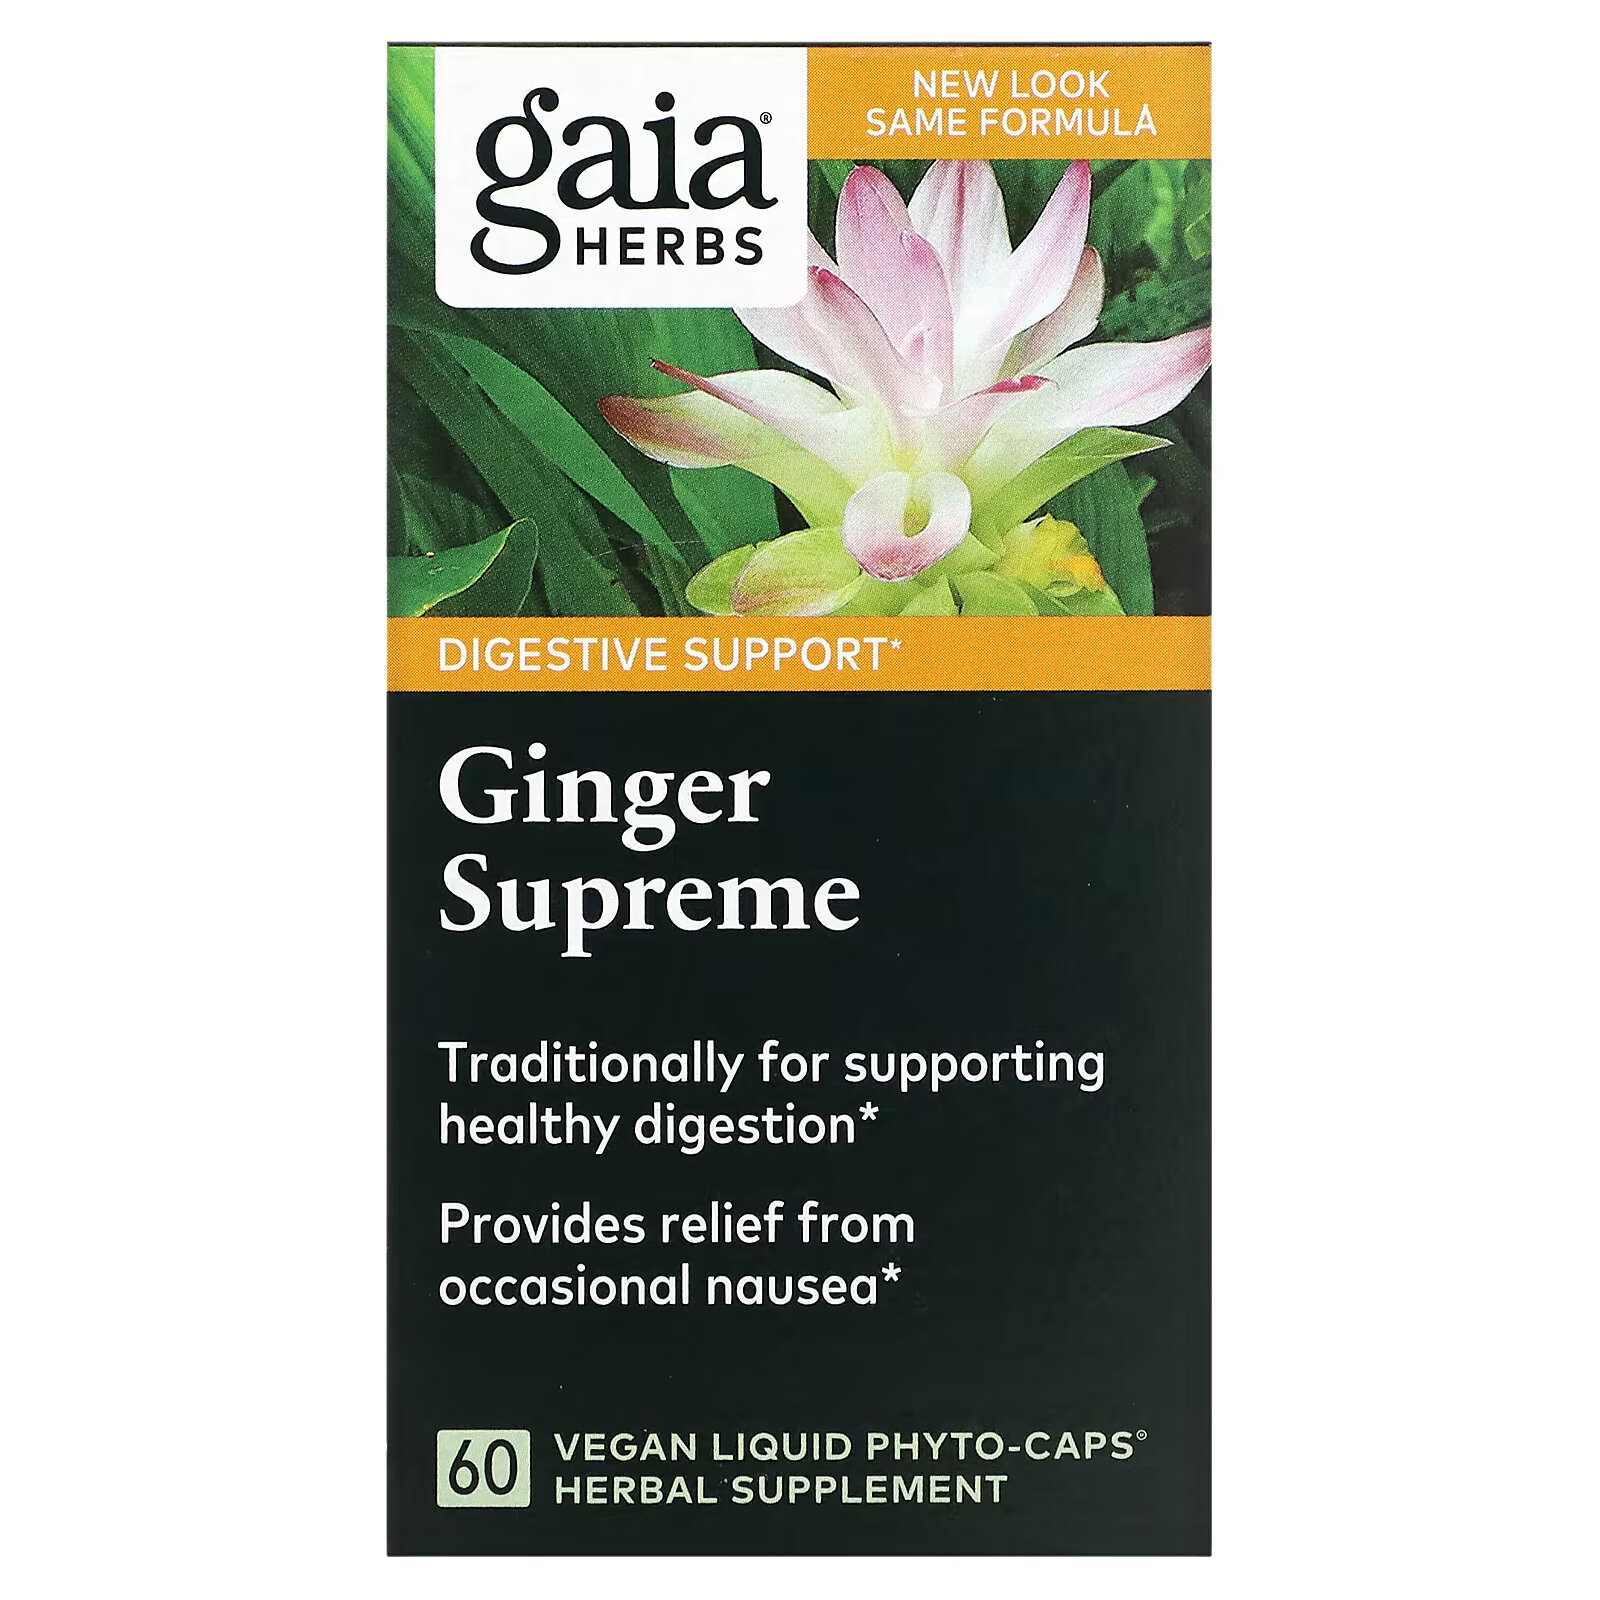 Gaia Herbs, Ginger Supreme, 60 веганских жидких фито-капсул gaia herbs astragalus supreme 60 веганских фито капсул с жидкостью